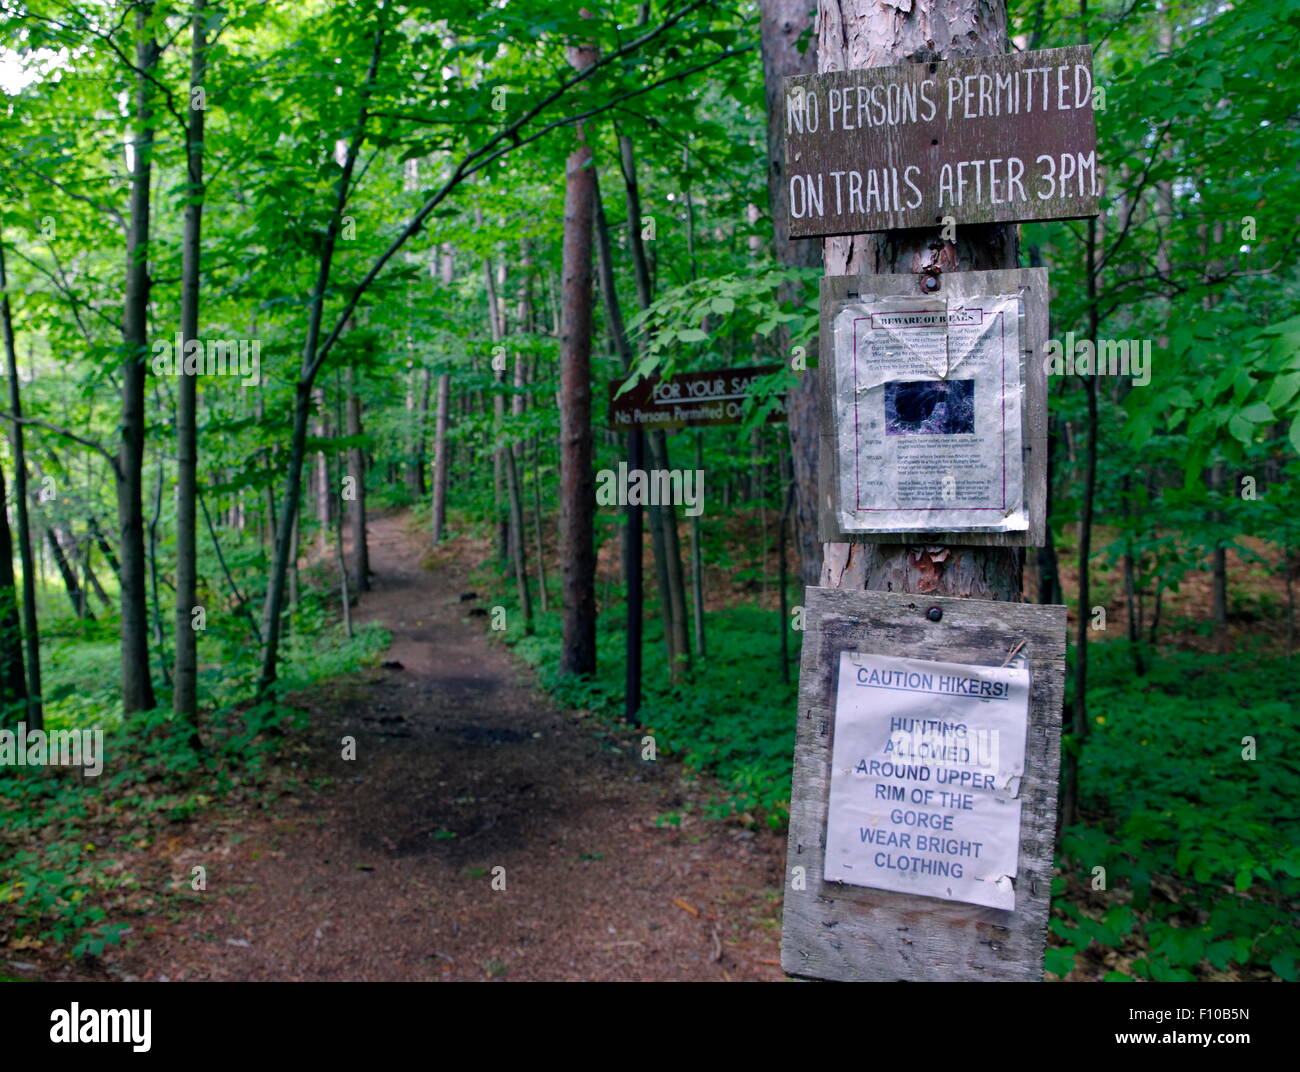 Trail Regulations at Whetstone Gulf State Park, near Turin, NY. Stock Photo